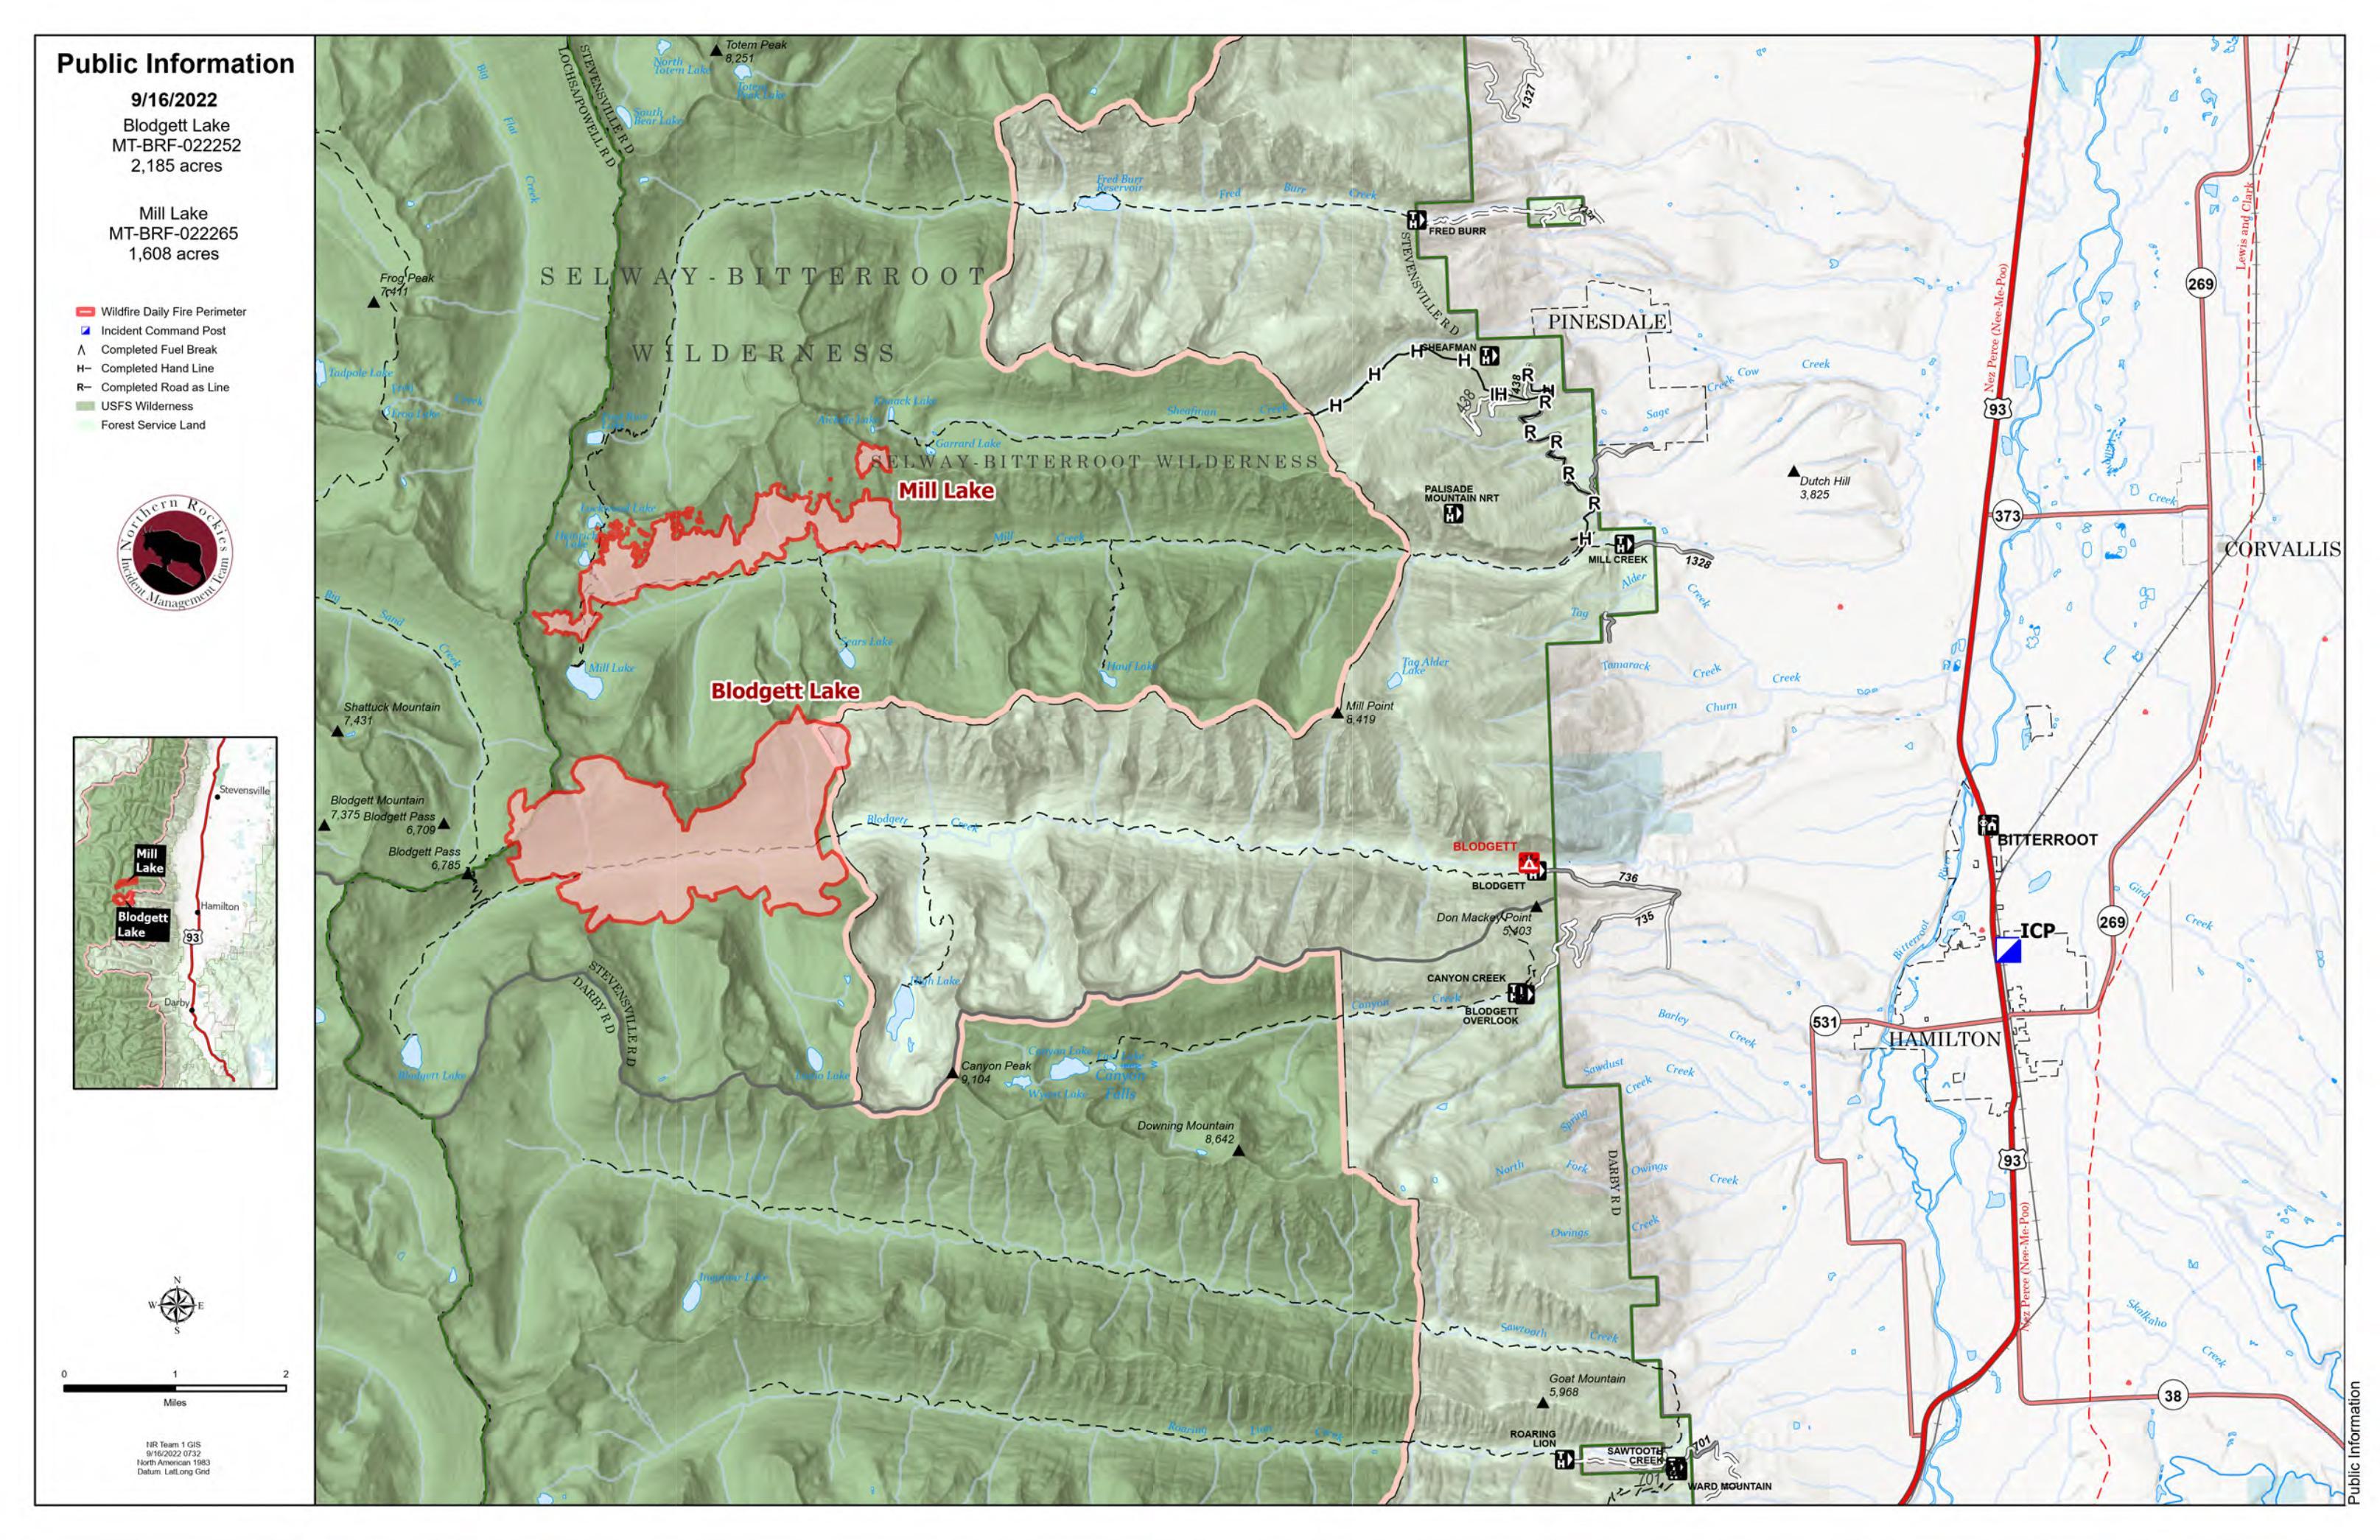 Blodgett and Mill Lake Map September 16, 2022